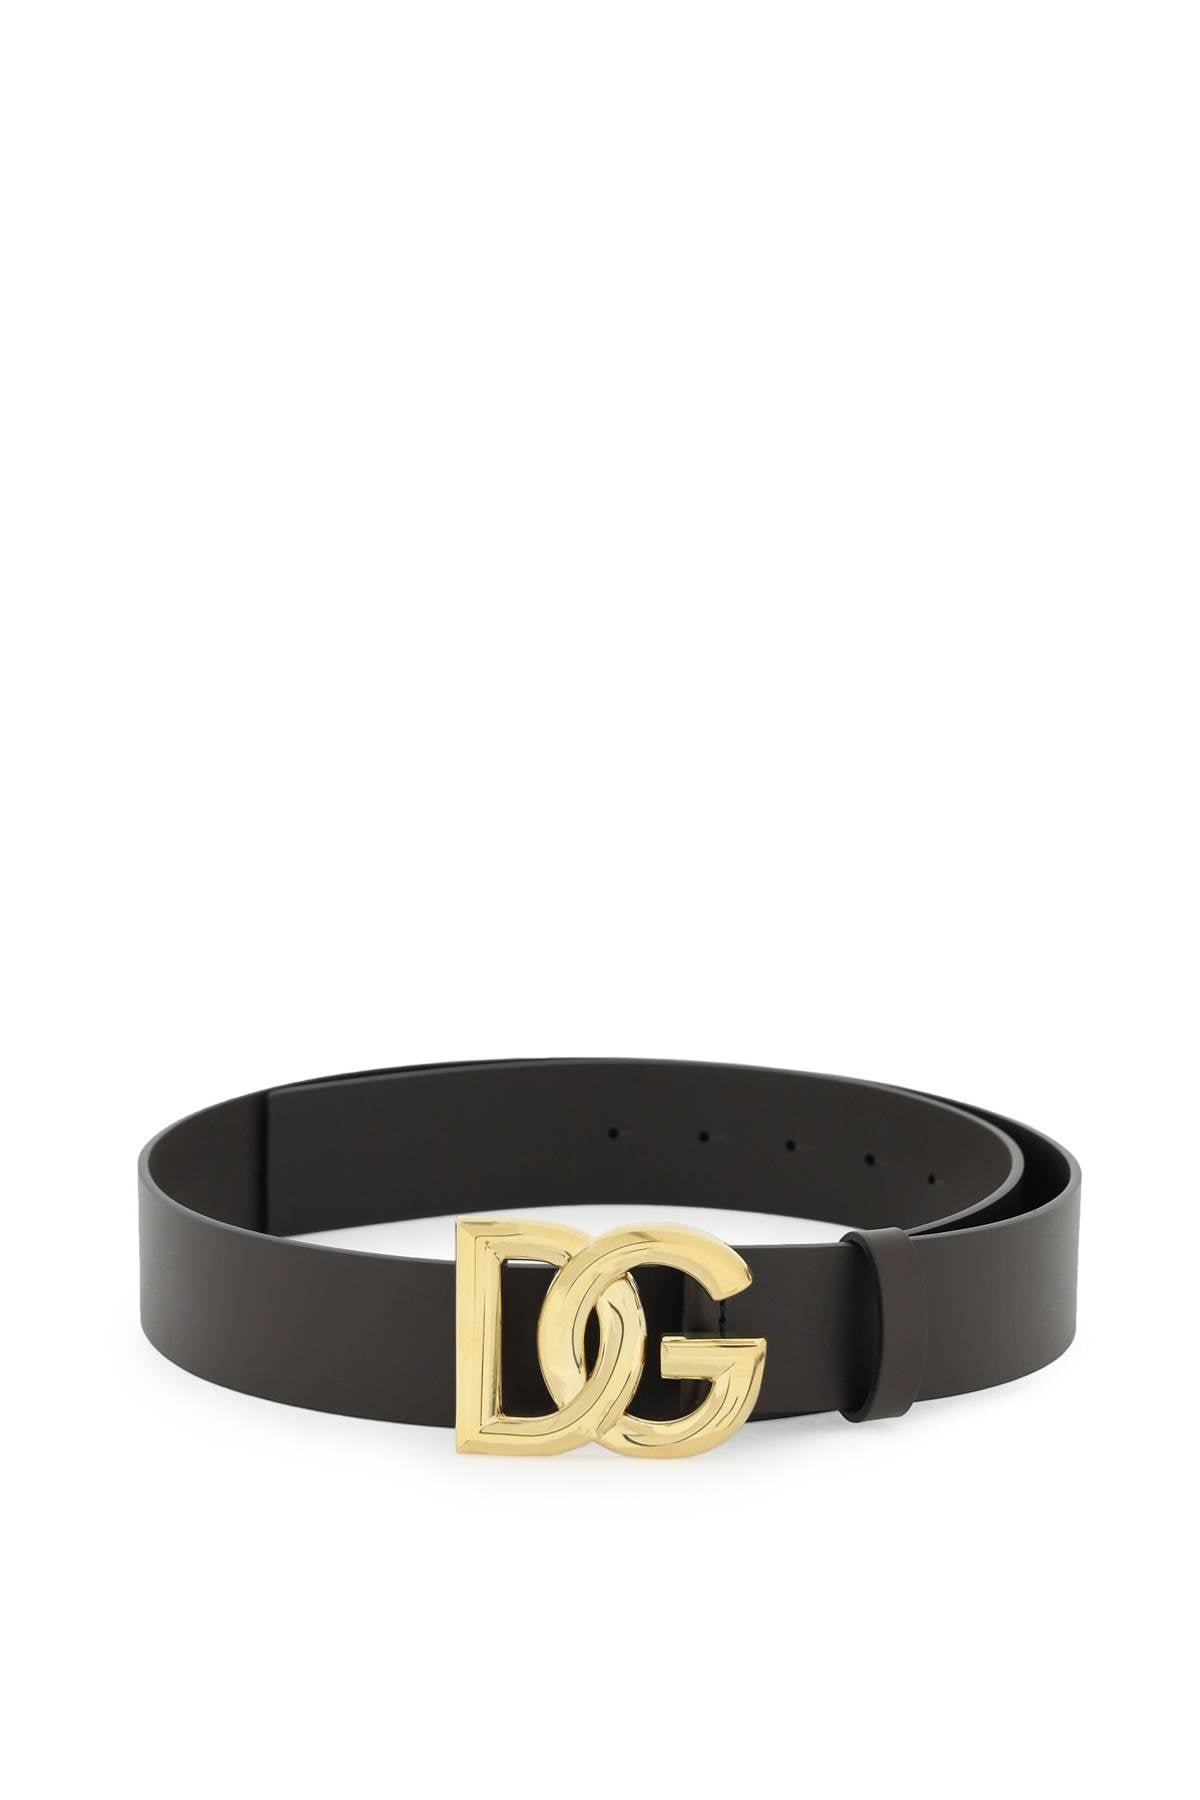 Dolce & Gabbana Dolce & gabbana lux leather belt with dg buckle